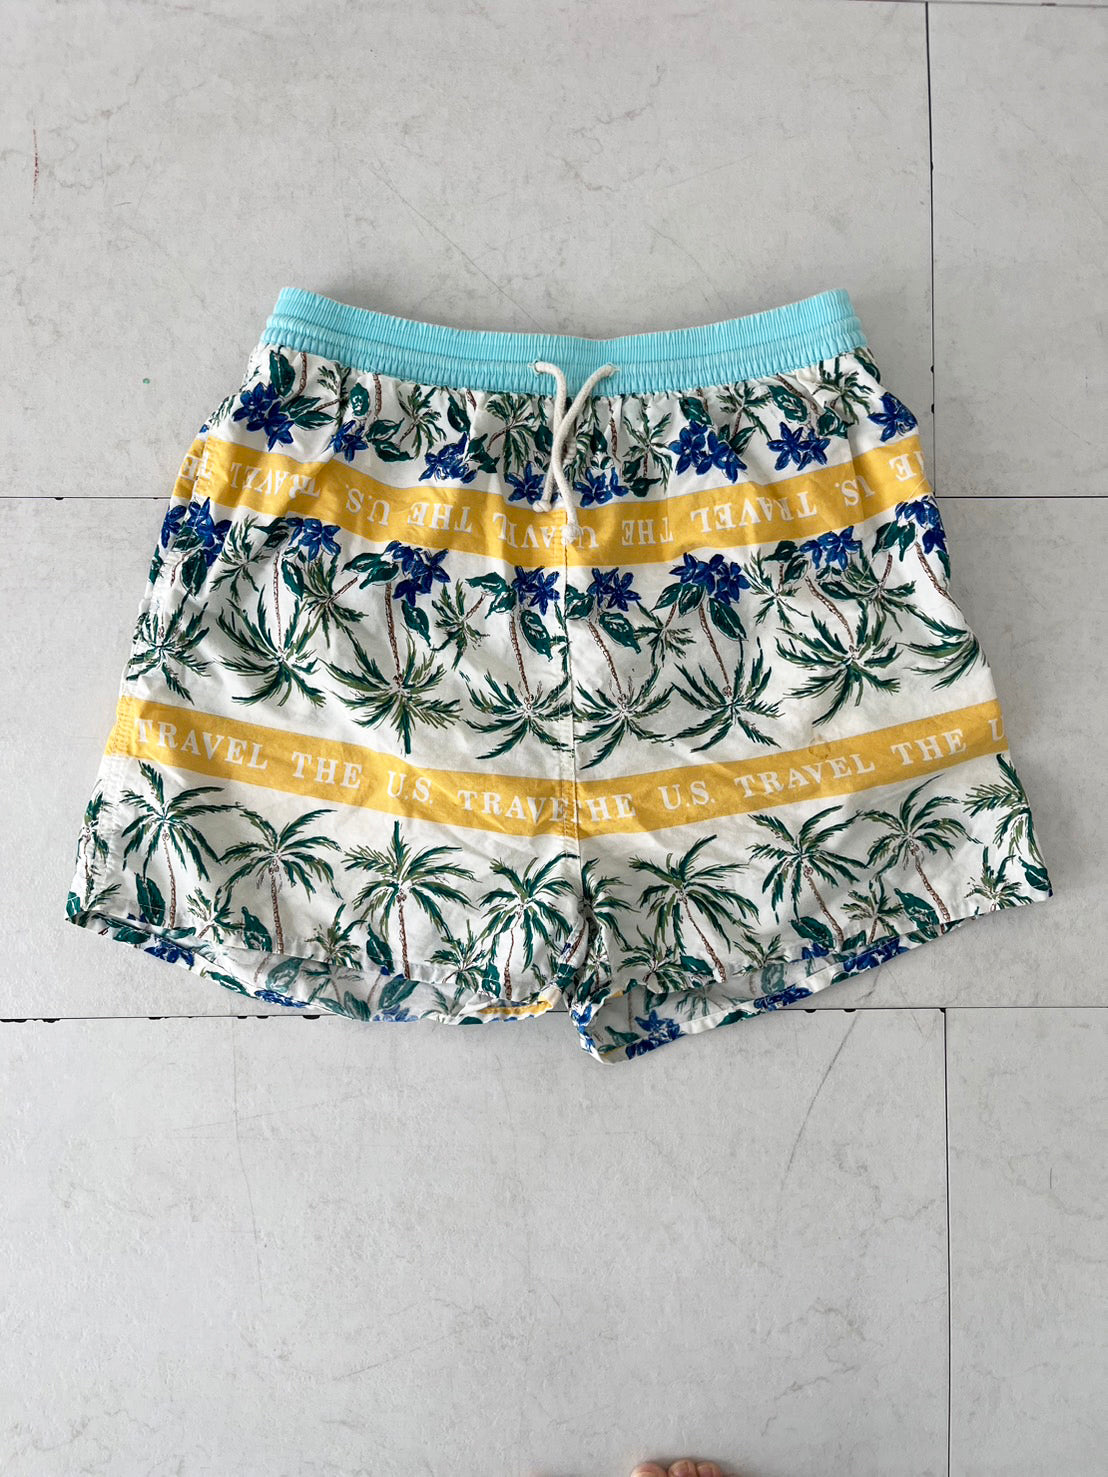 【EURO vintage 】The Travel The U.S. beach shorts 水着 サーフパンツ ビーチショーツ (women's L）